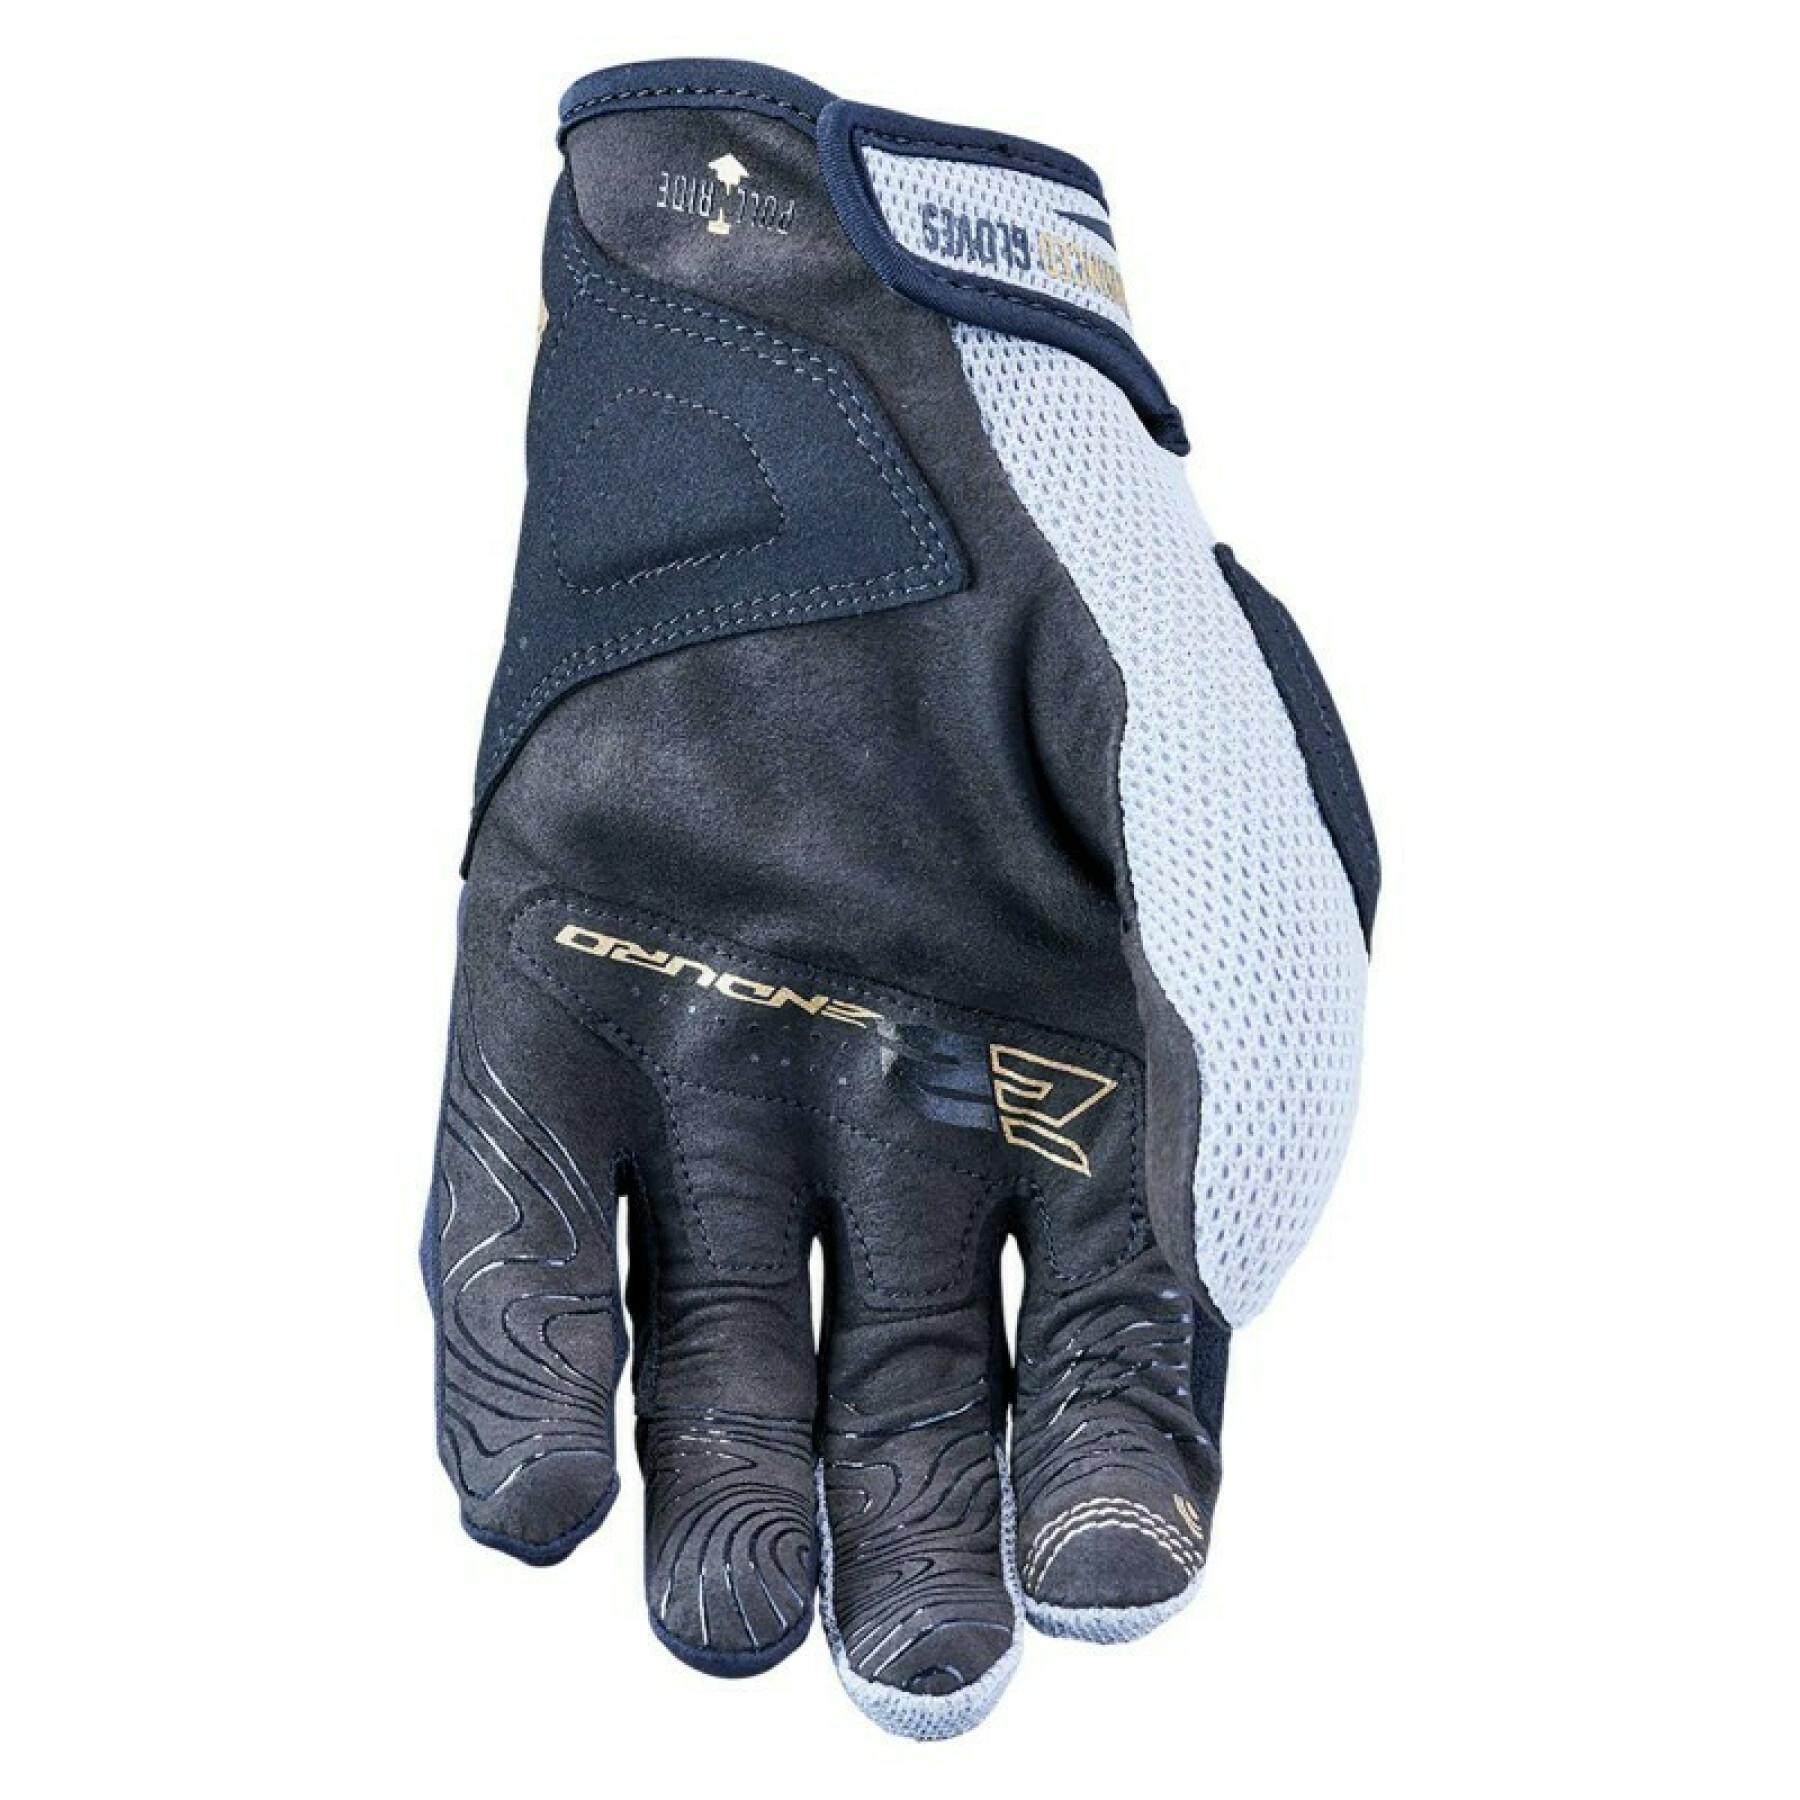 Gloves Five enduro 2